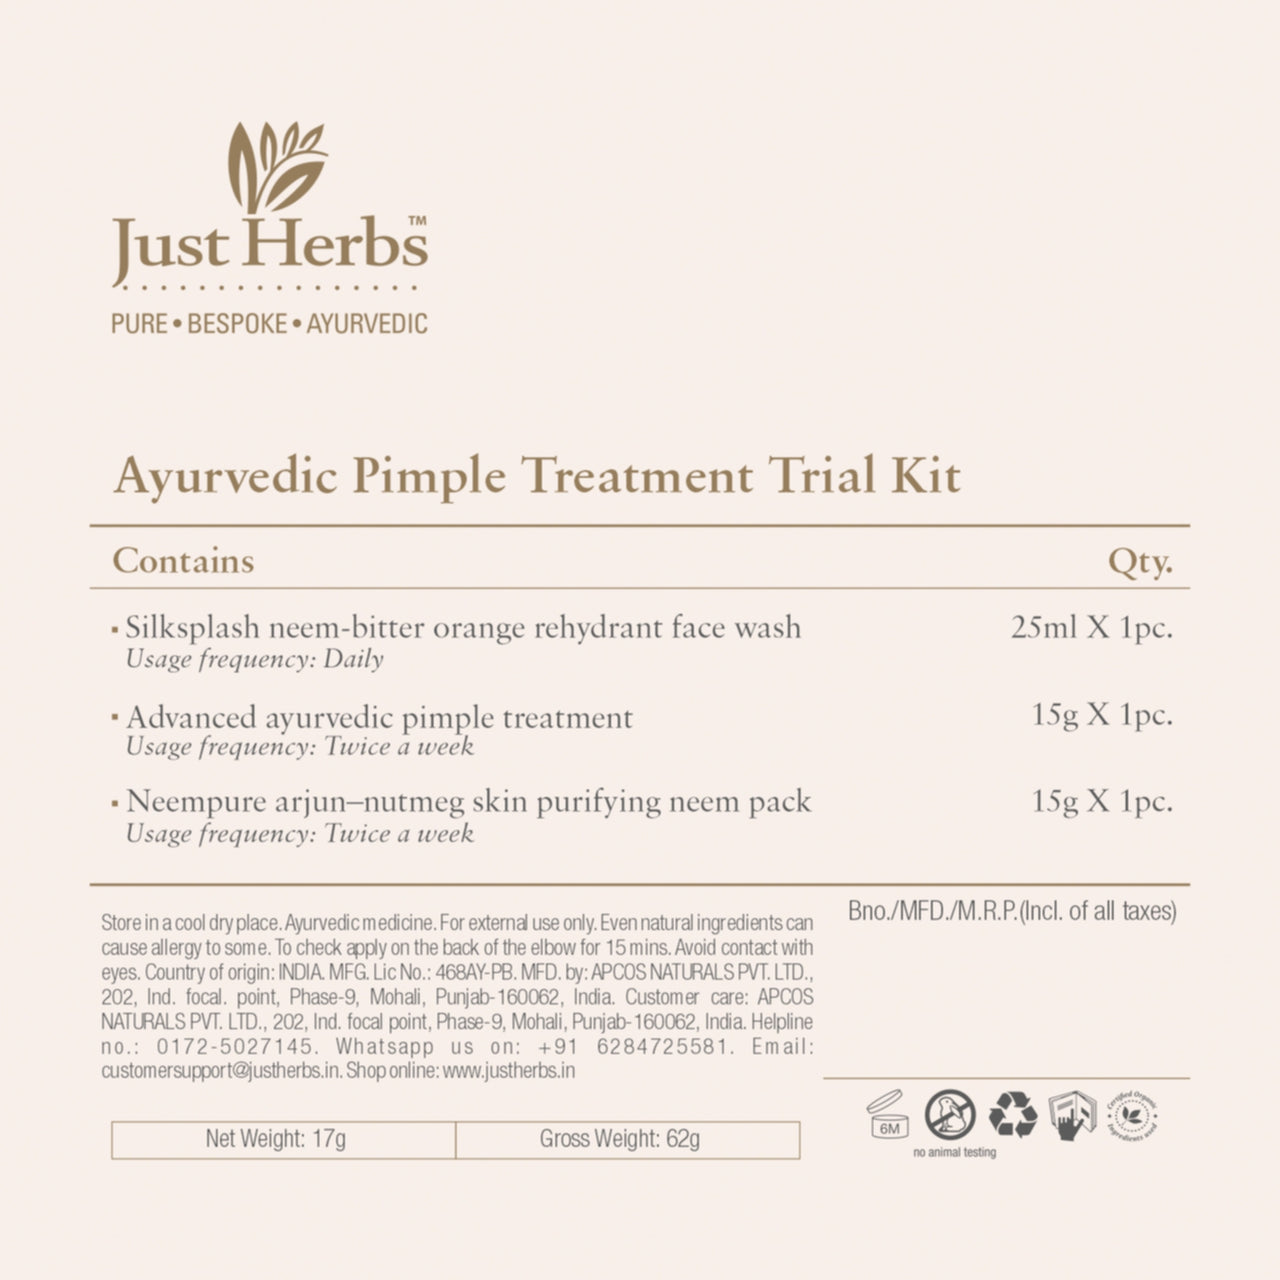 Ayurvedic Pimple Treatment Trial Kit